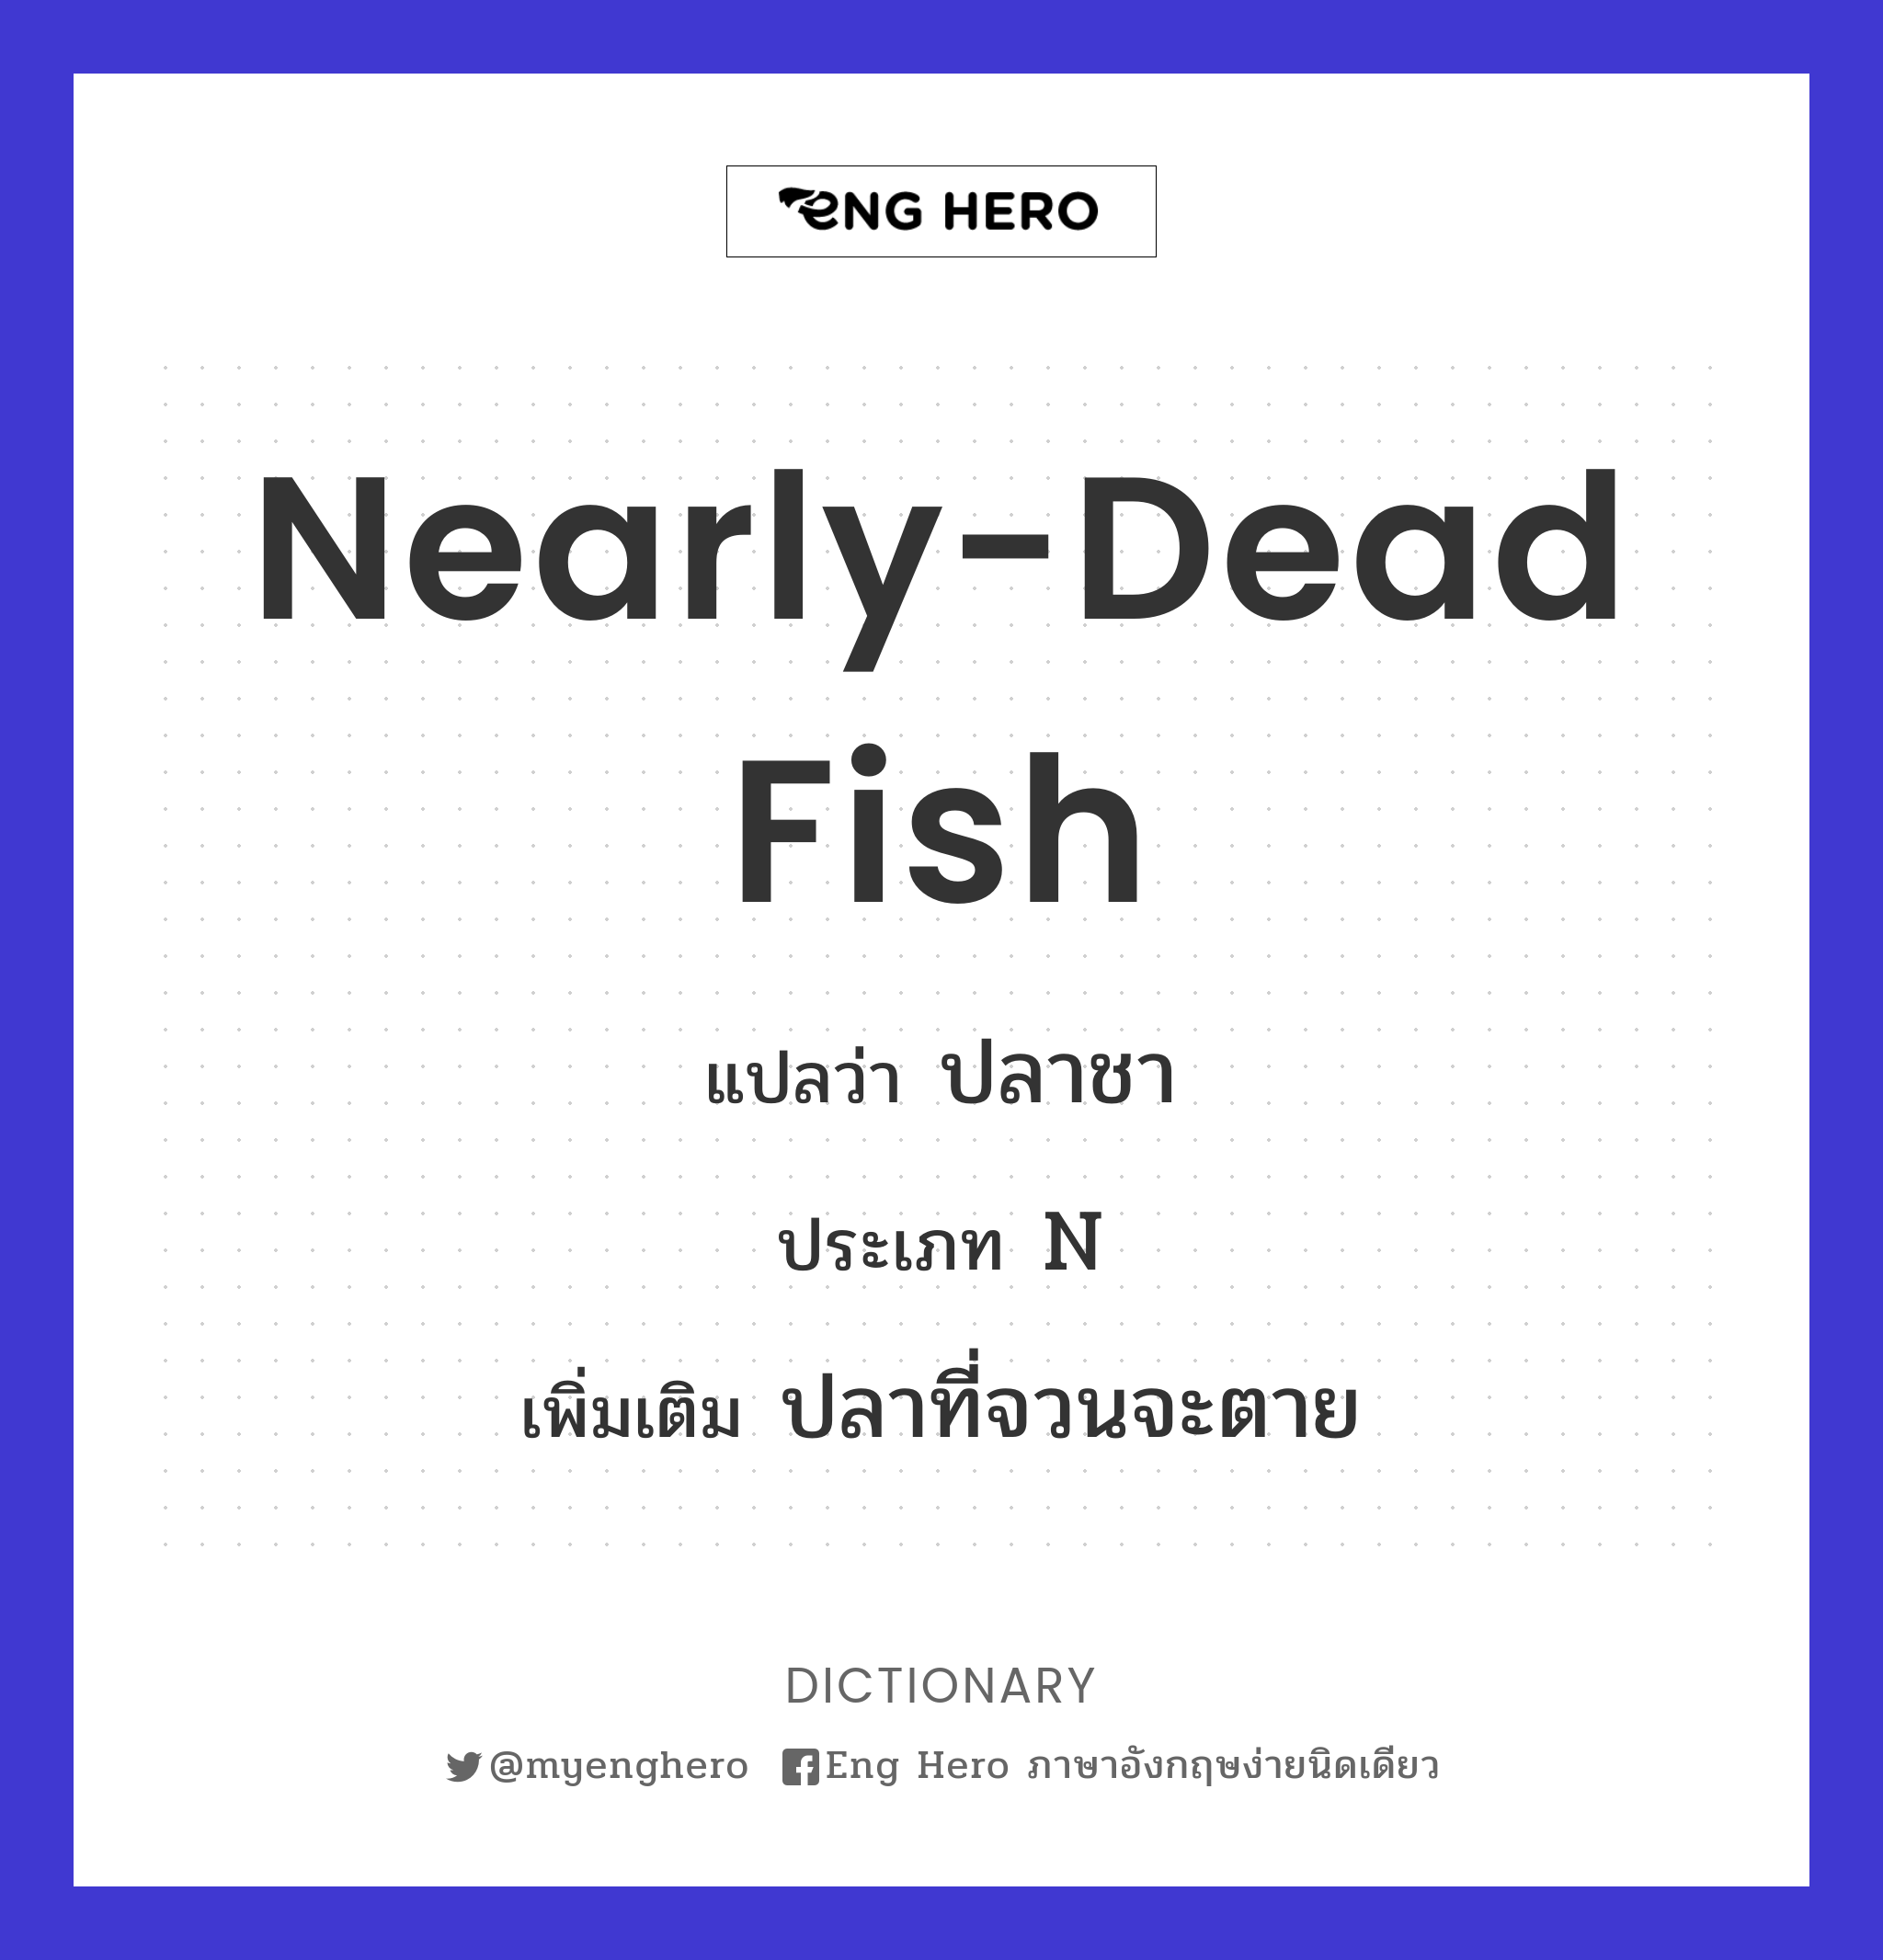 nearly-dead fish